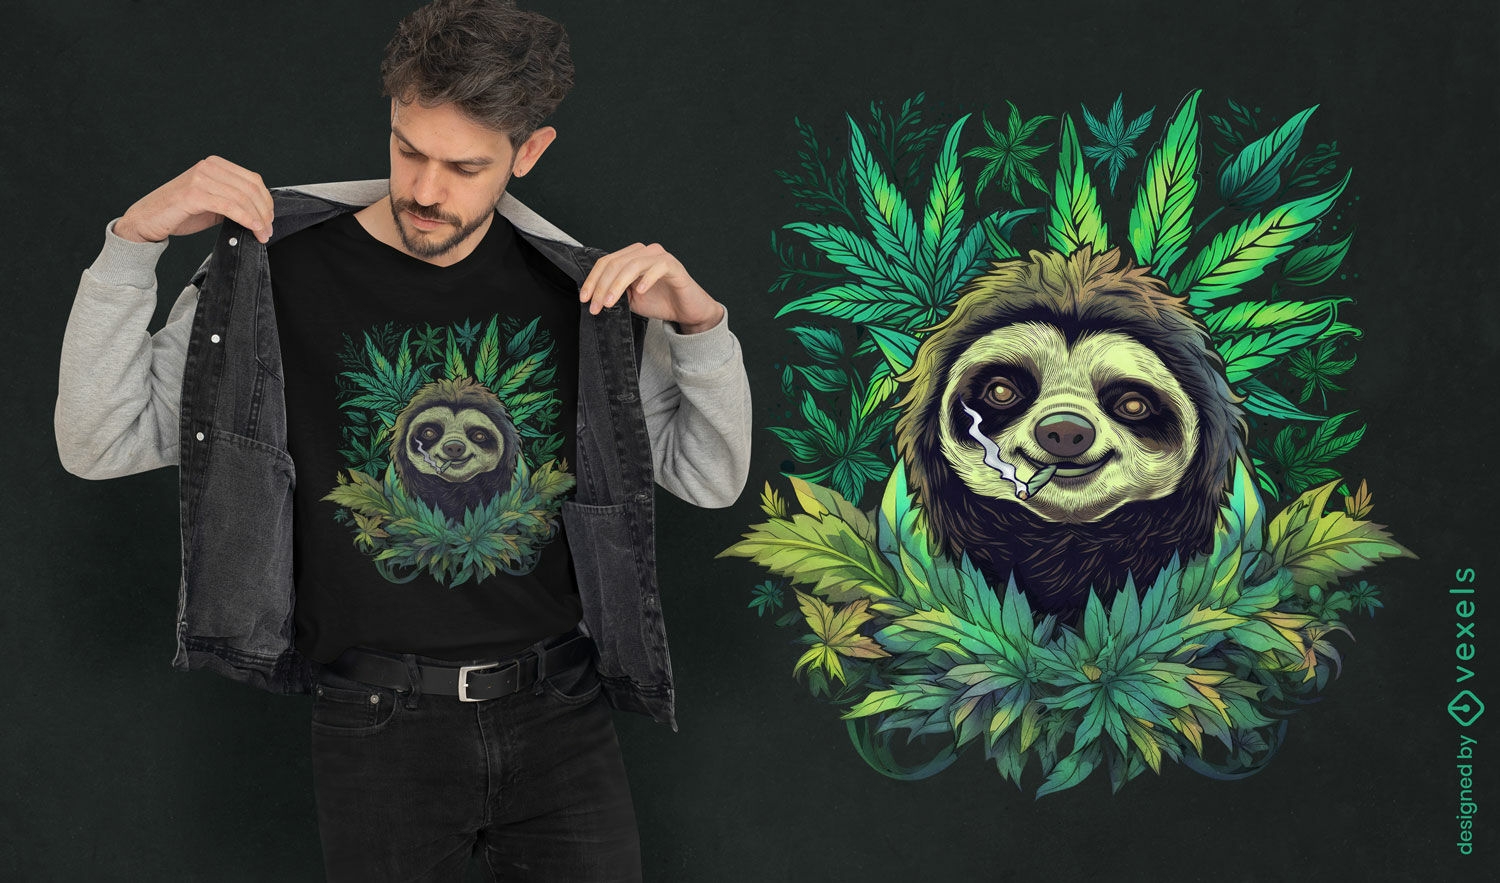 Design de camiseta para pregui?a cannabis